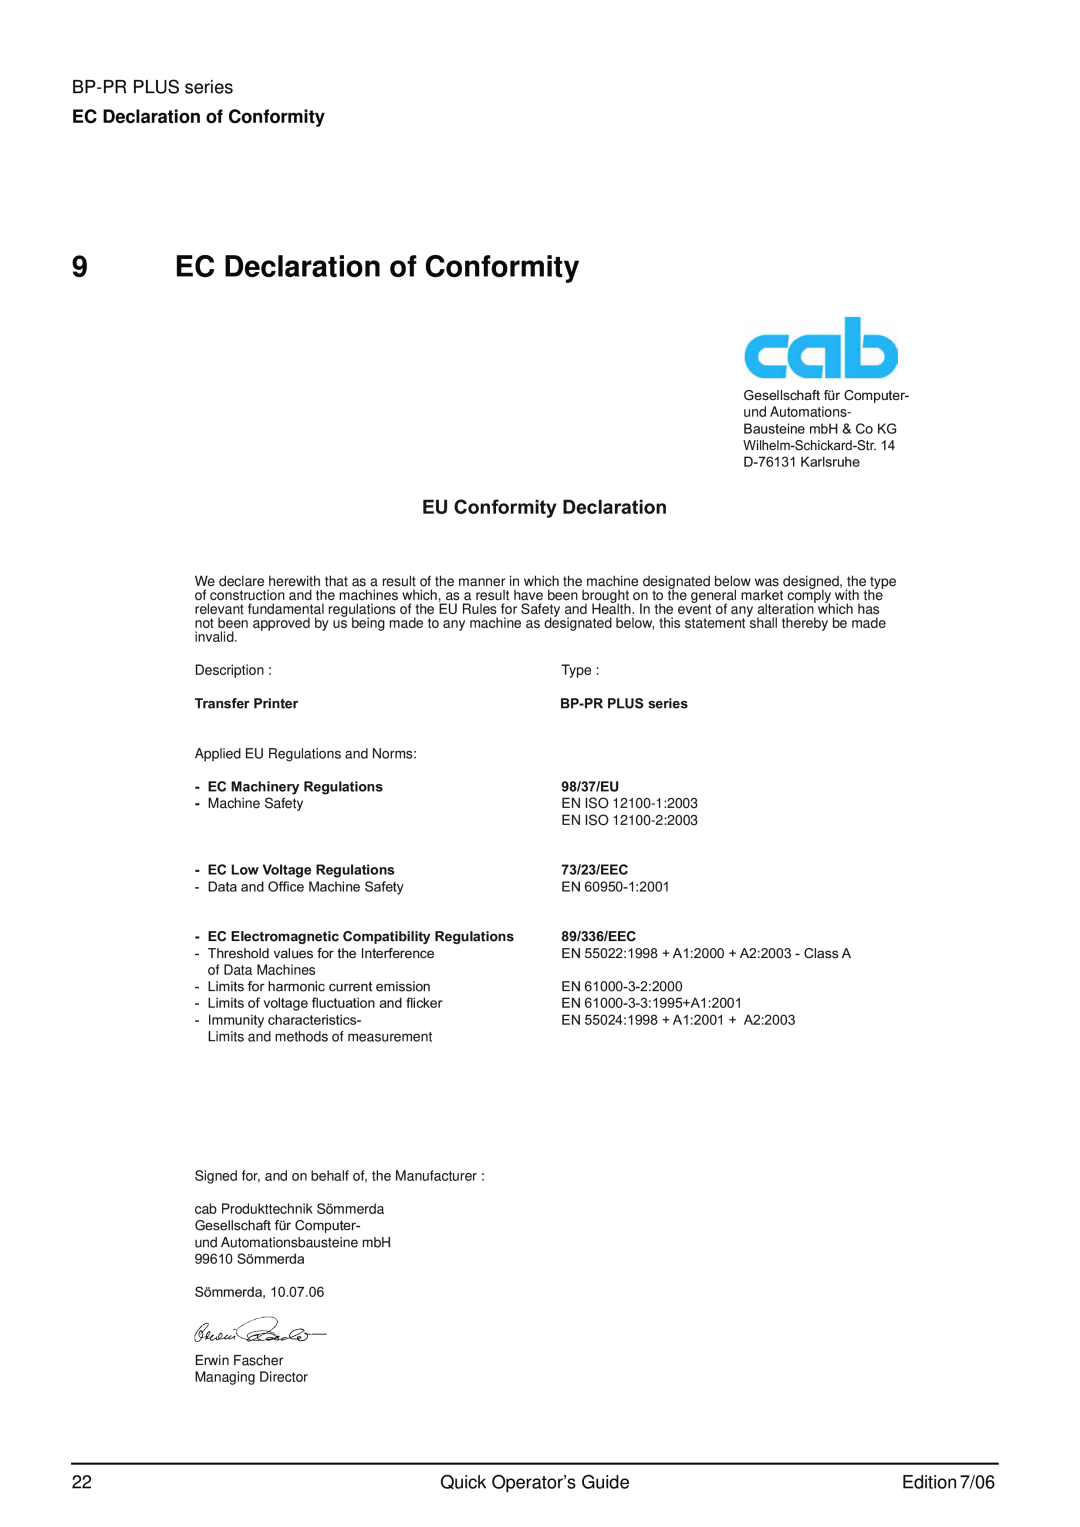 Brady BP-PR PLUS Series EC Declaration of Conformity, EU Conformity Declaration, Edition 7/06, Transfer Printer, 98/37/EU 